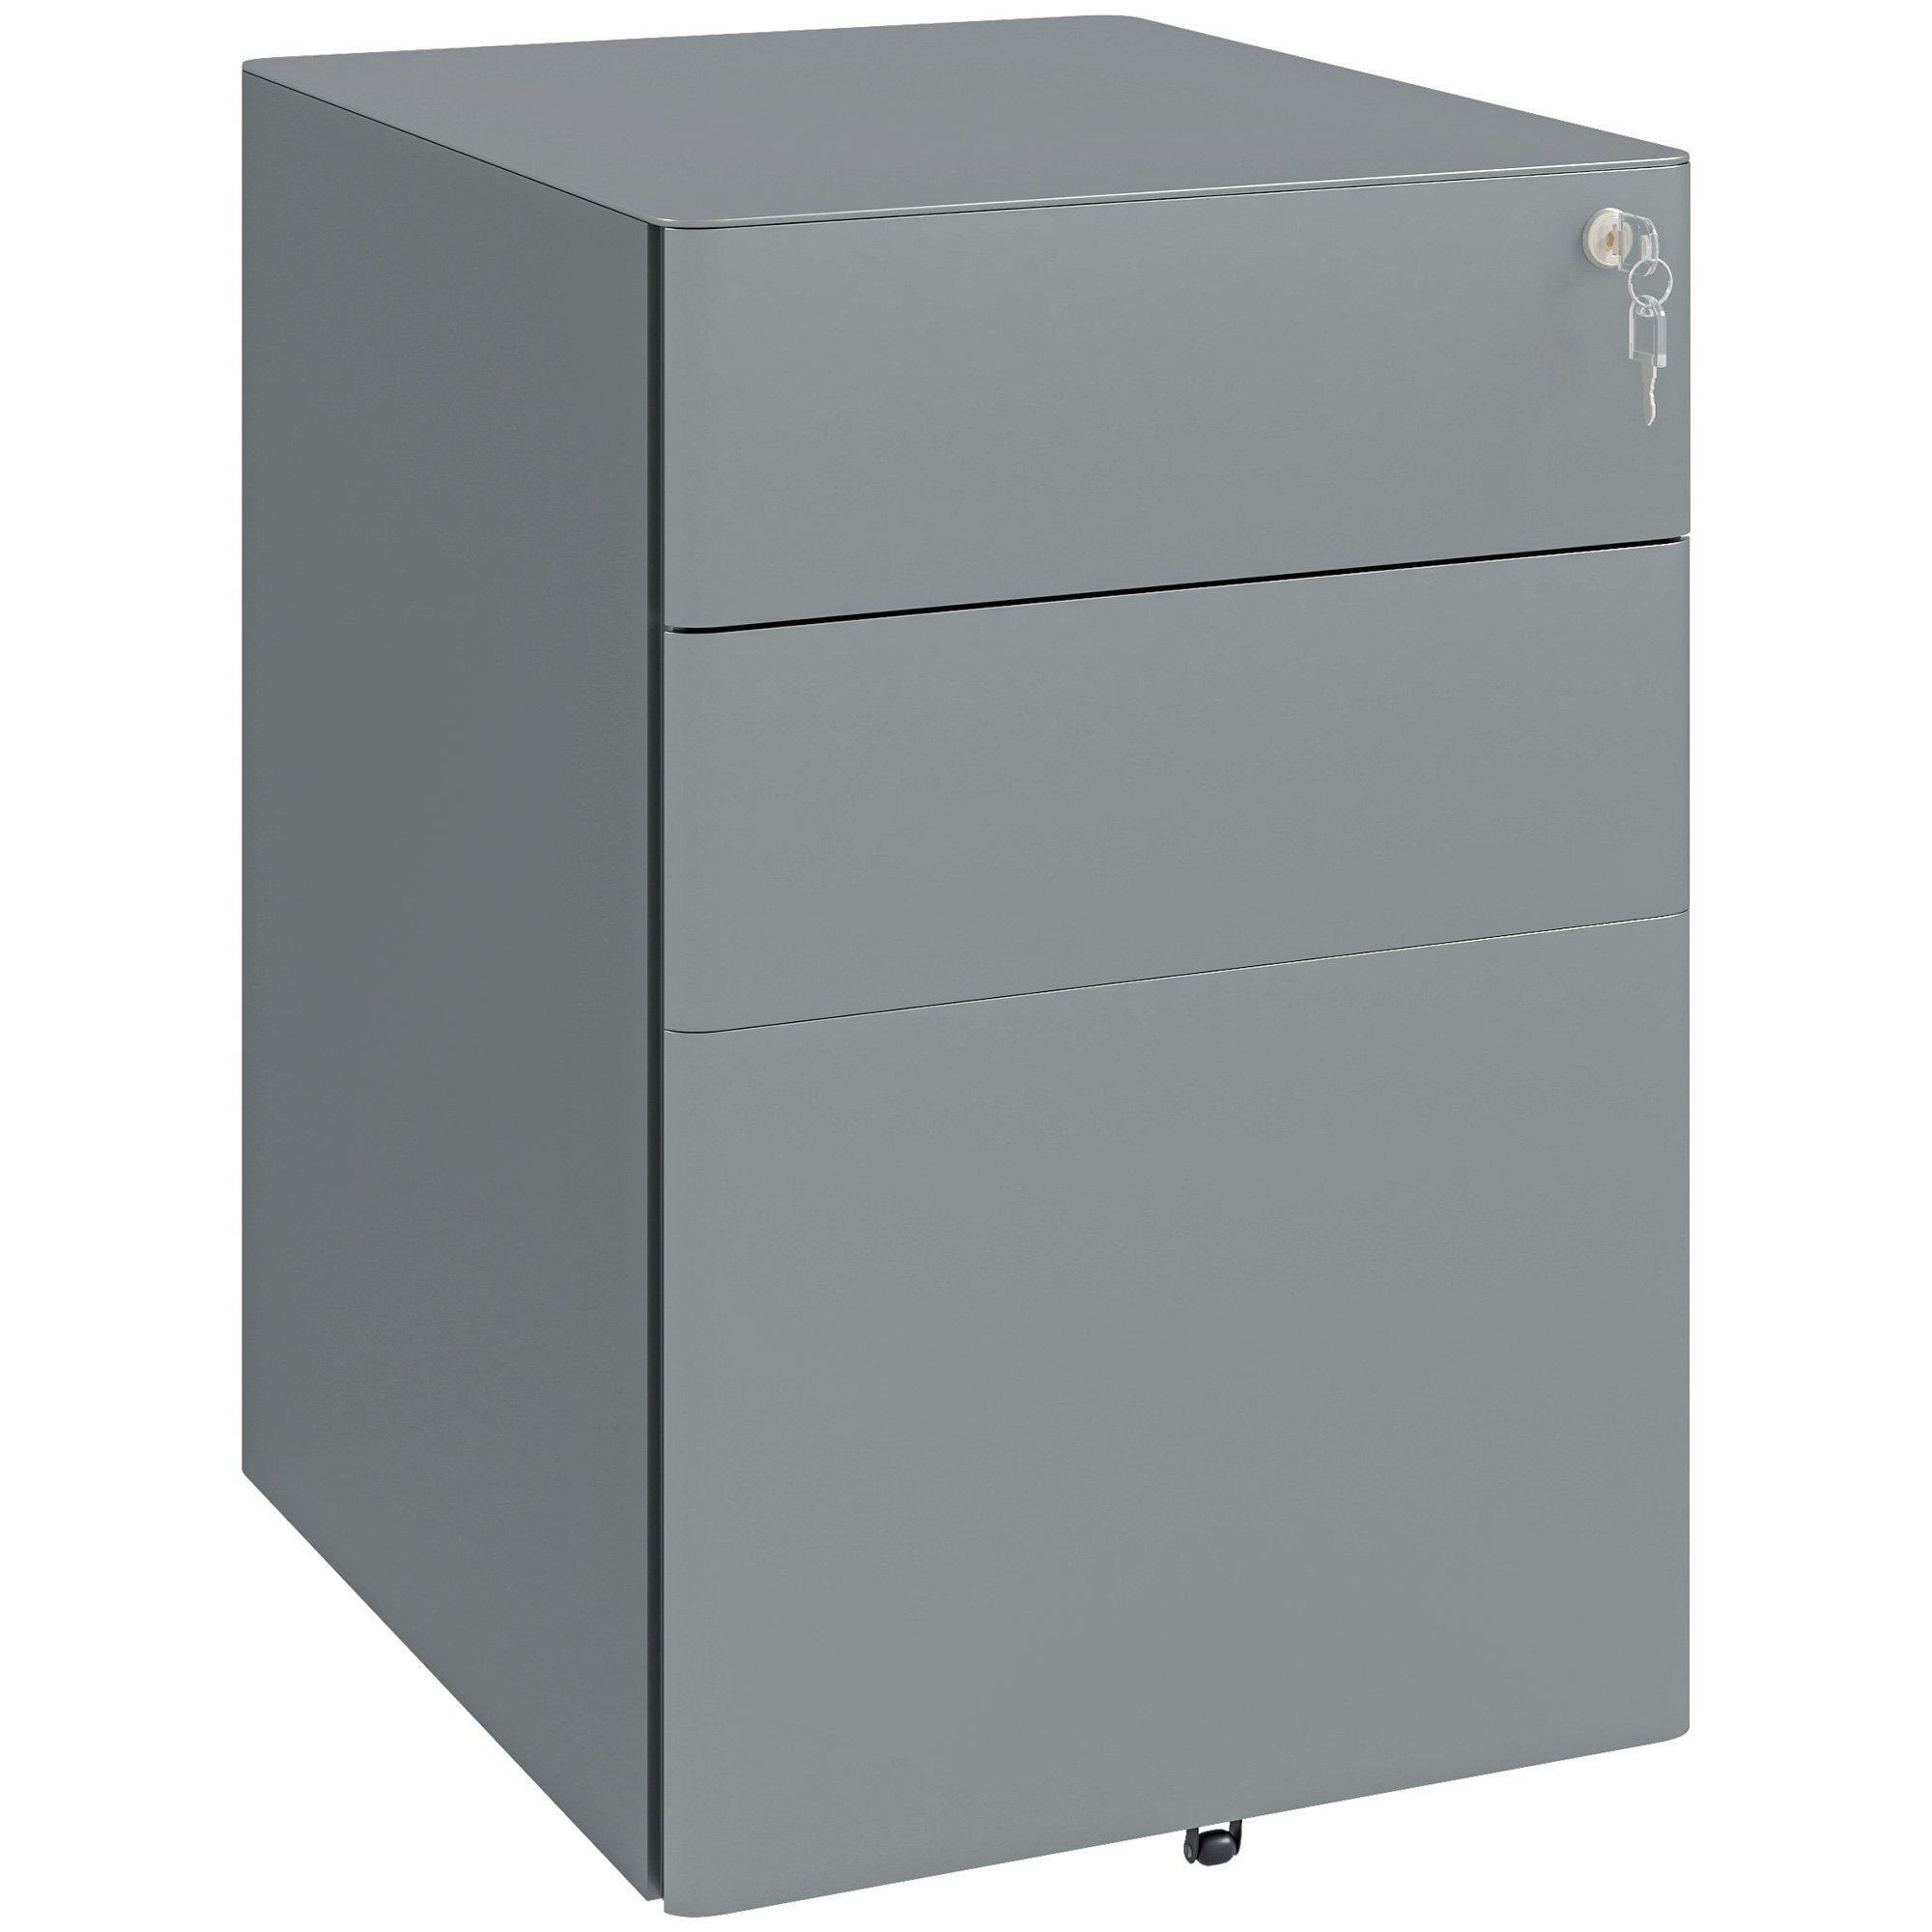 3 Drawer Metal Filing Cabinet Lockable 5 Wheels Compact Under Desk - image 1